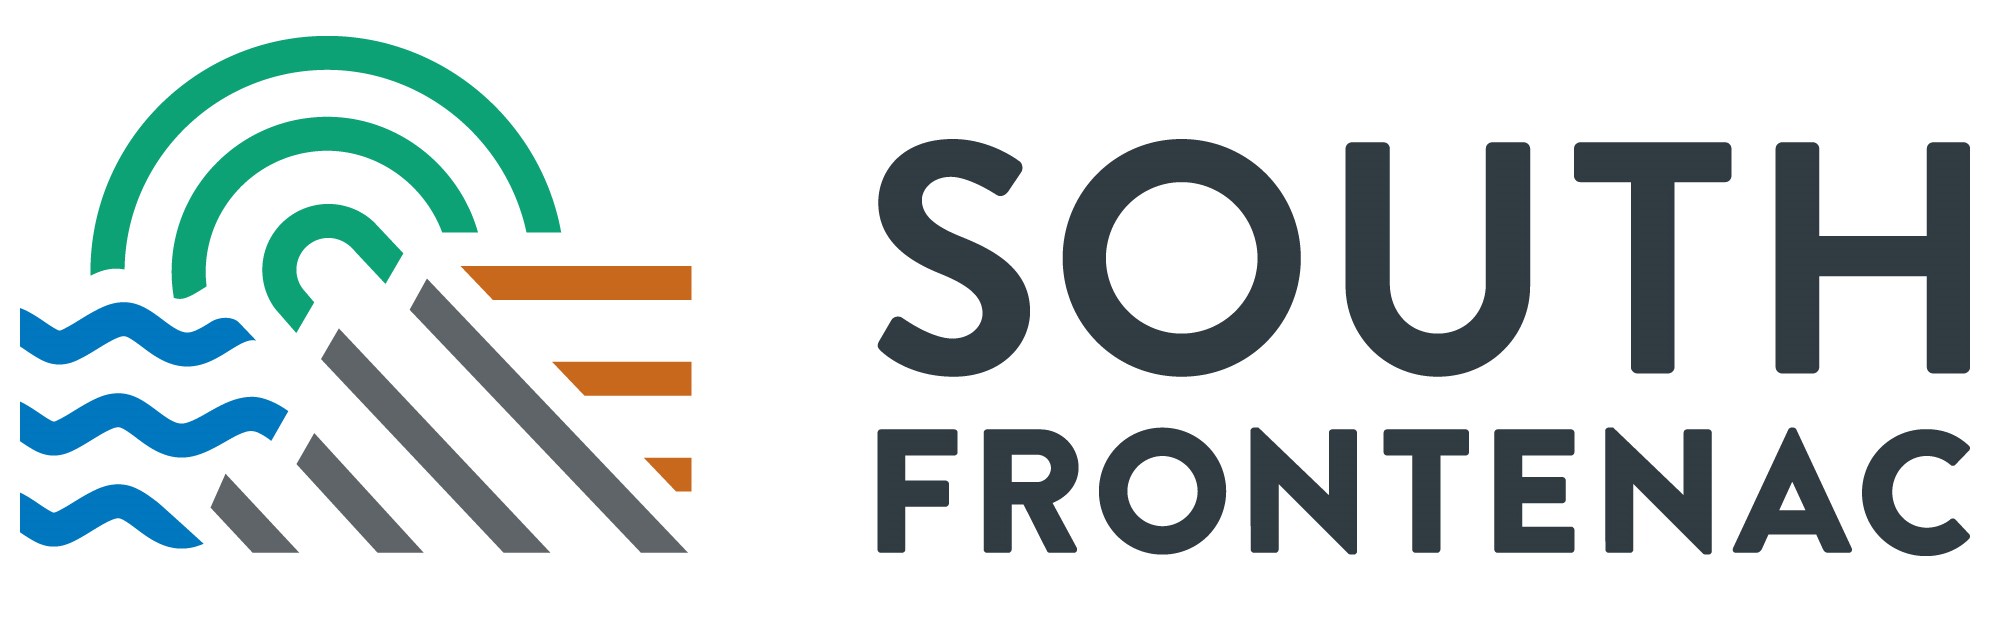 South Frontenac New Logo 